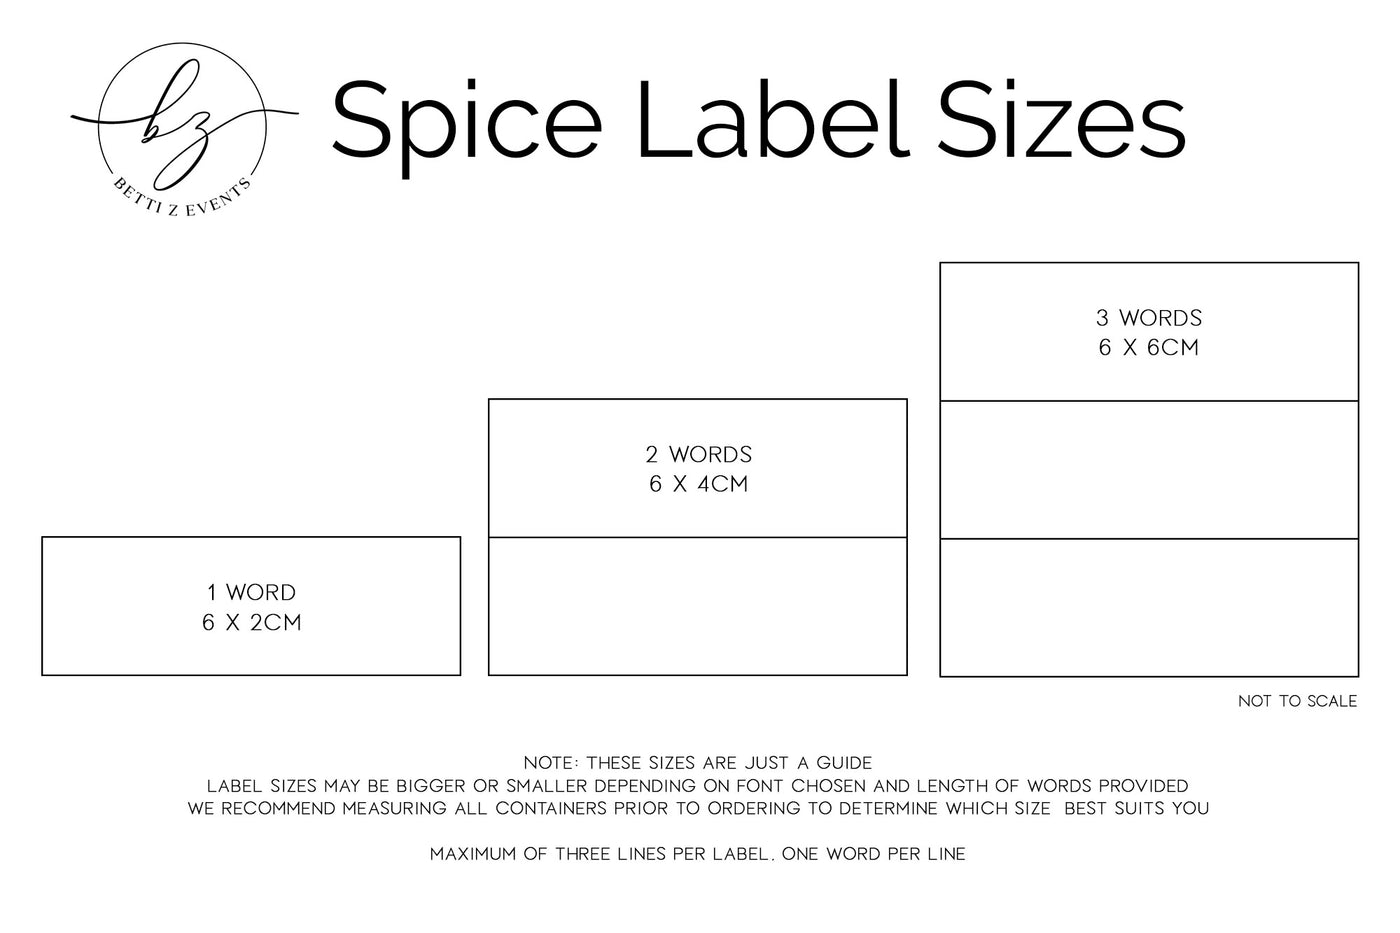 Spice Jar/Pantry/Home Organisation Labels